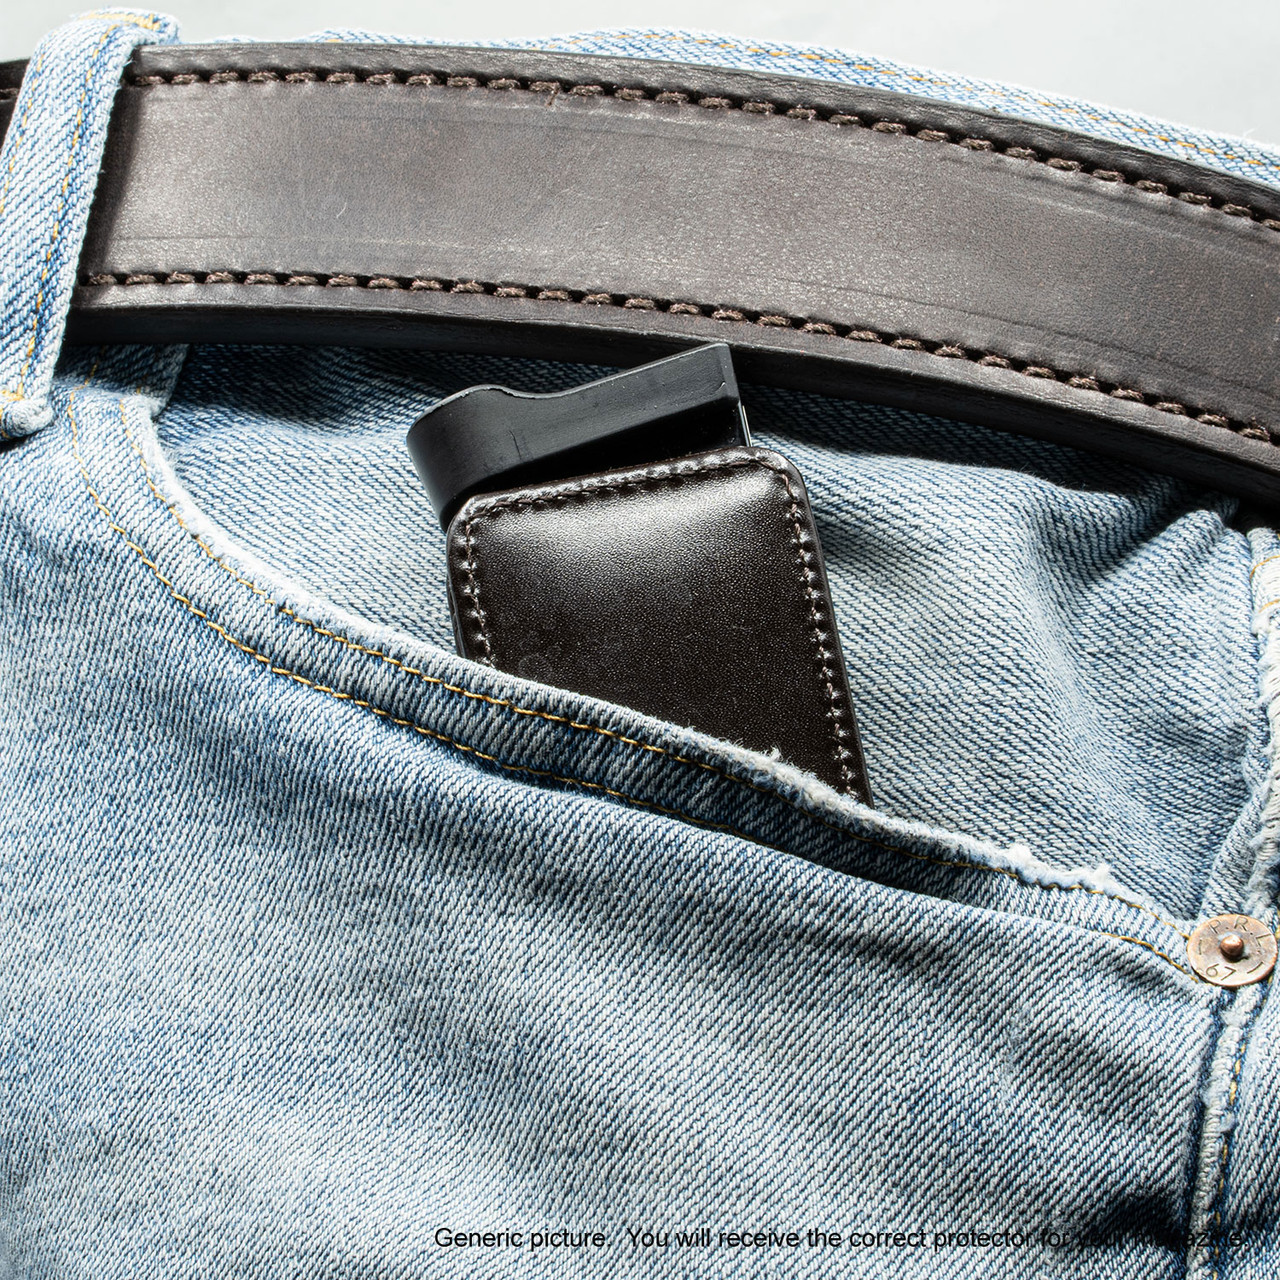 Ruger EC9s Brown Leather Magazine Pocket Protector